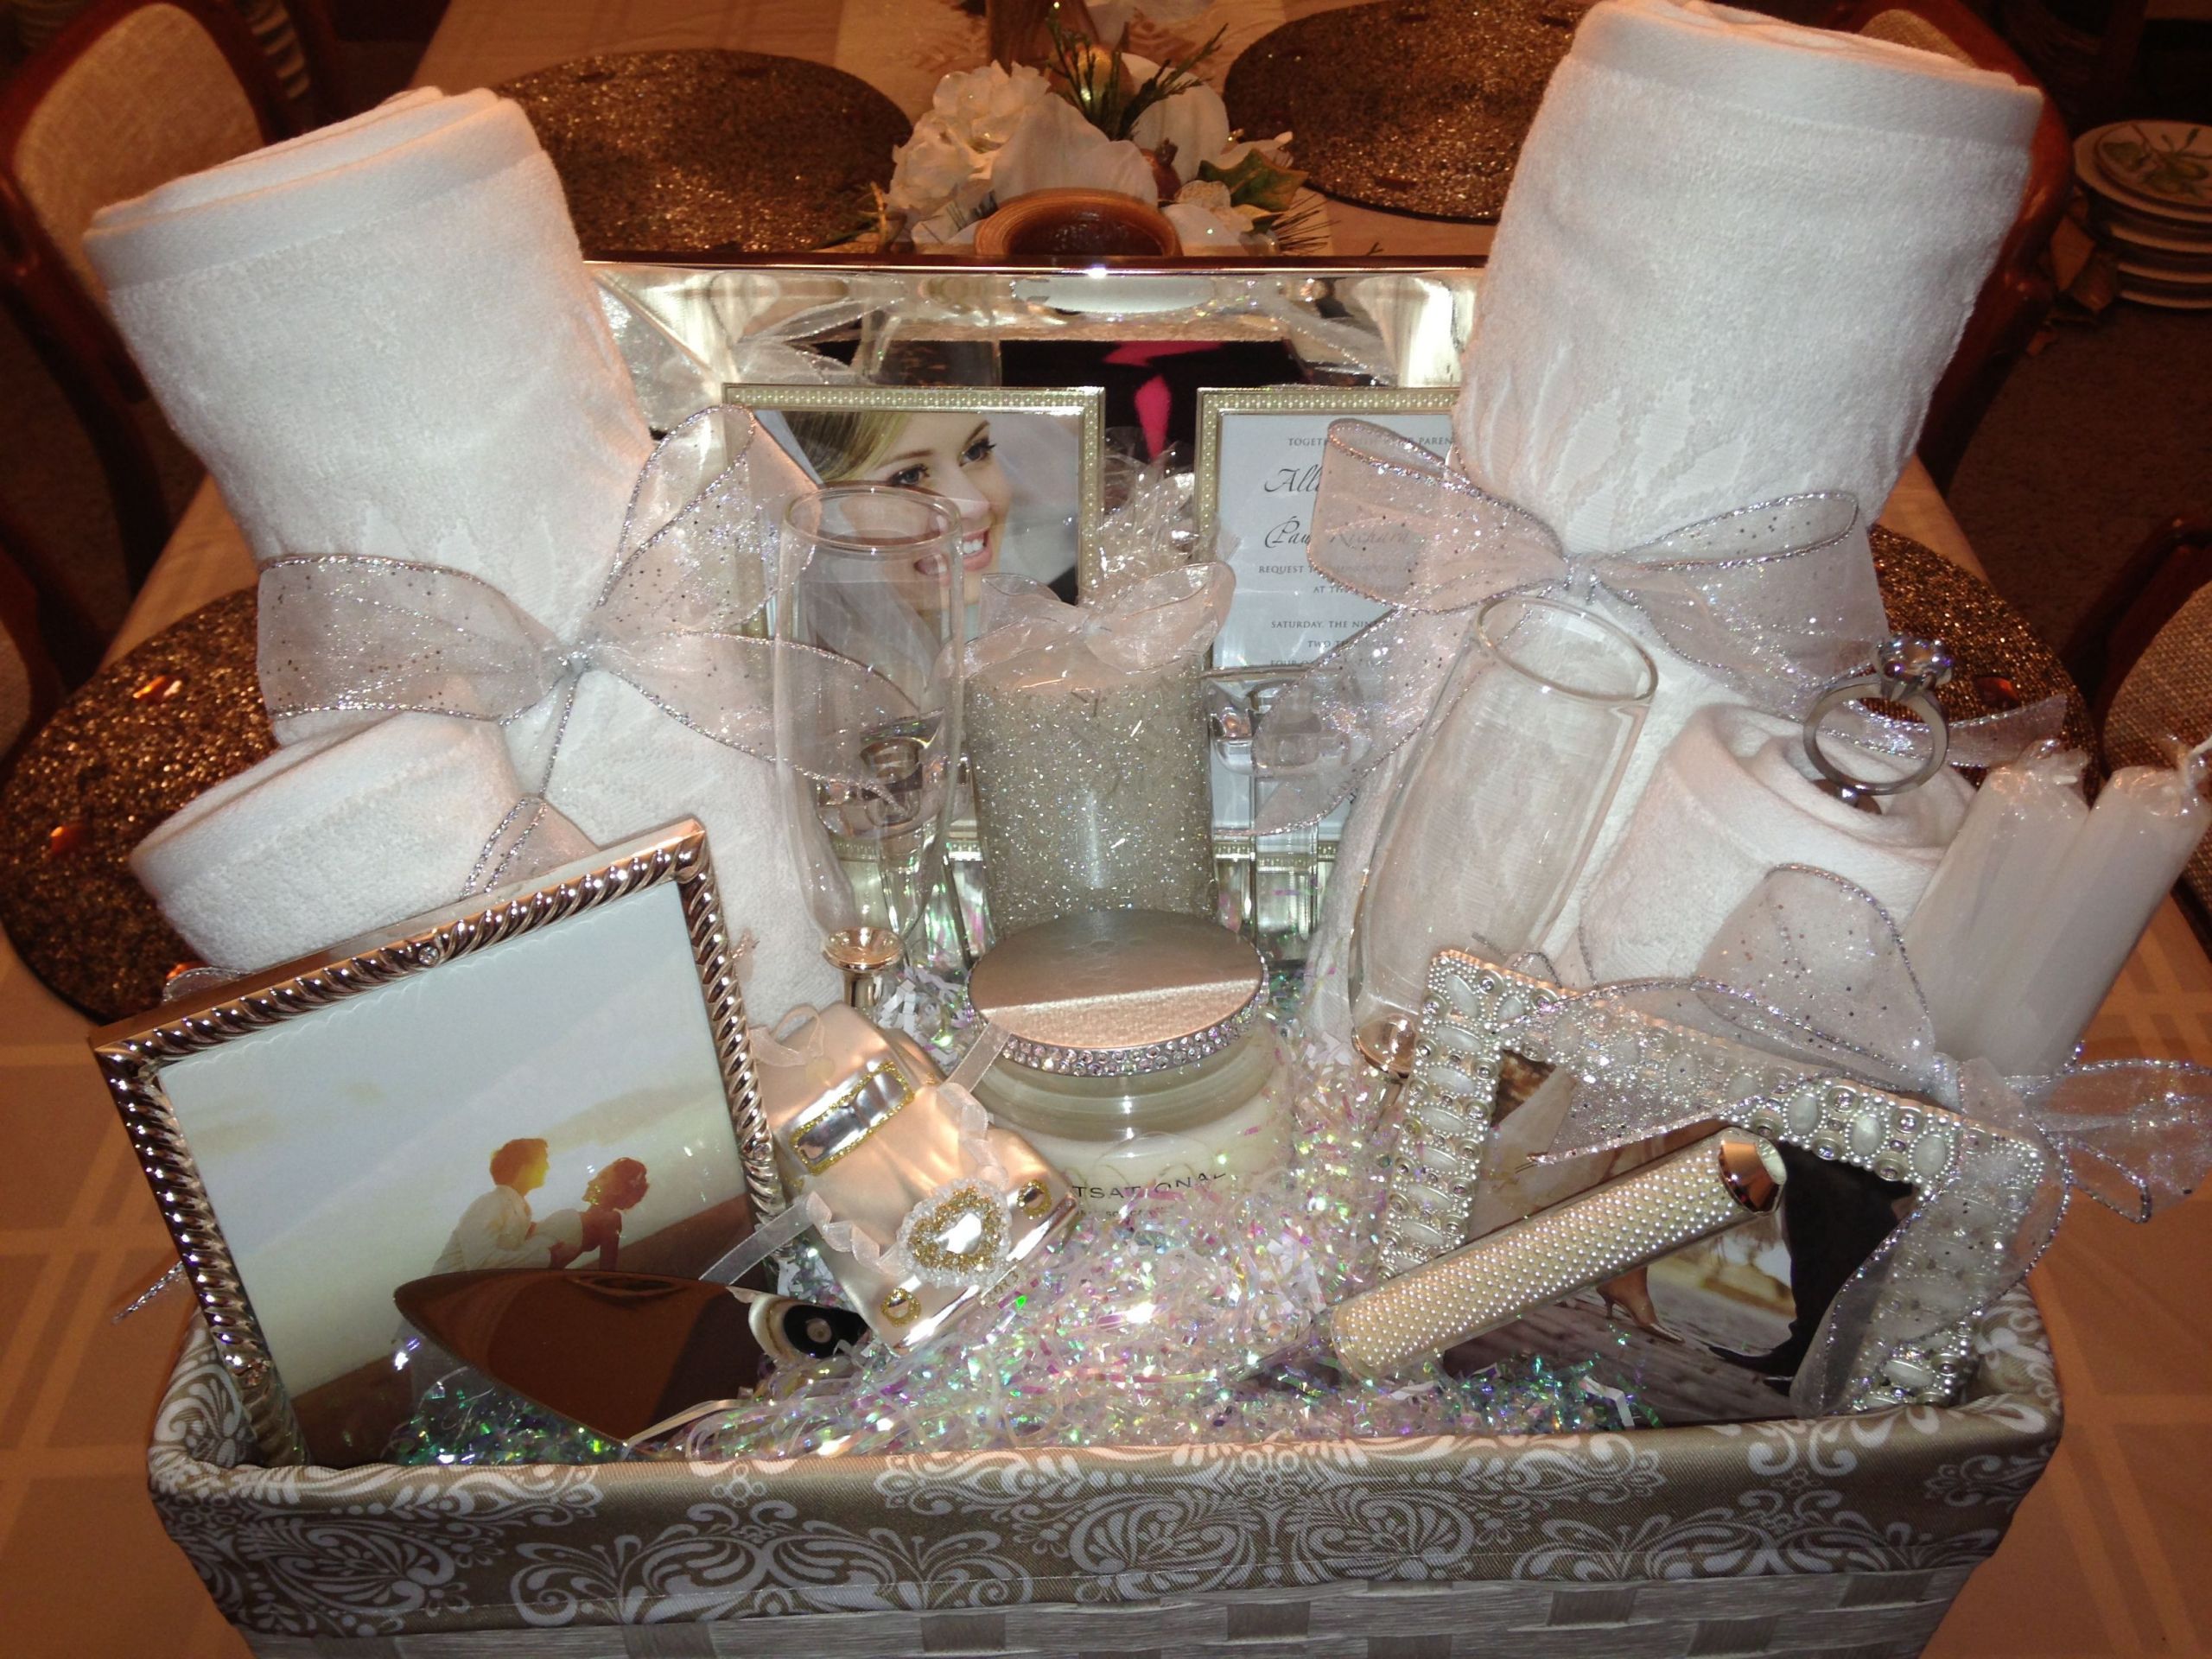 DIY Wedding Gift Ideas For Bride And Groom
 Bridal shower t basket ideas Ideasthatsparkle on